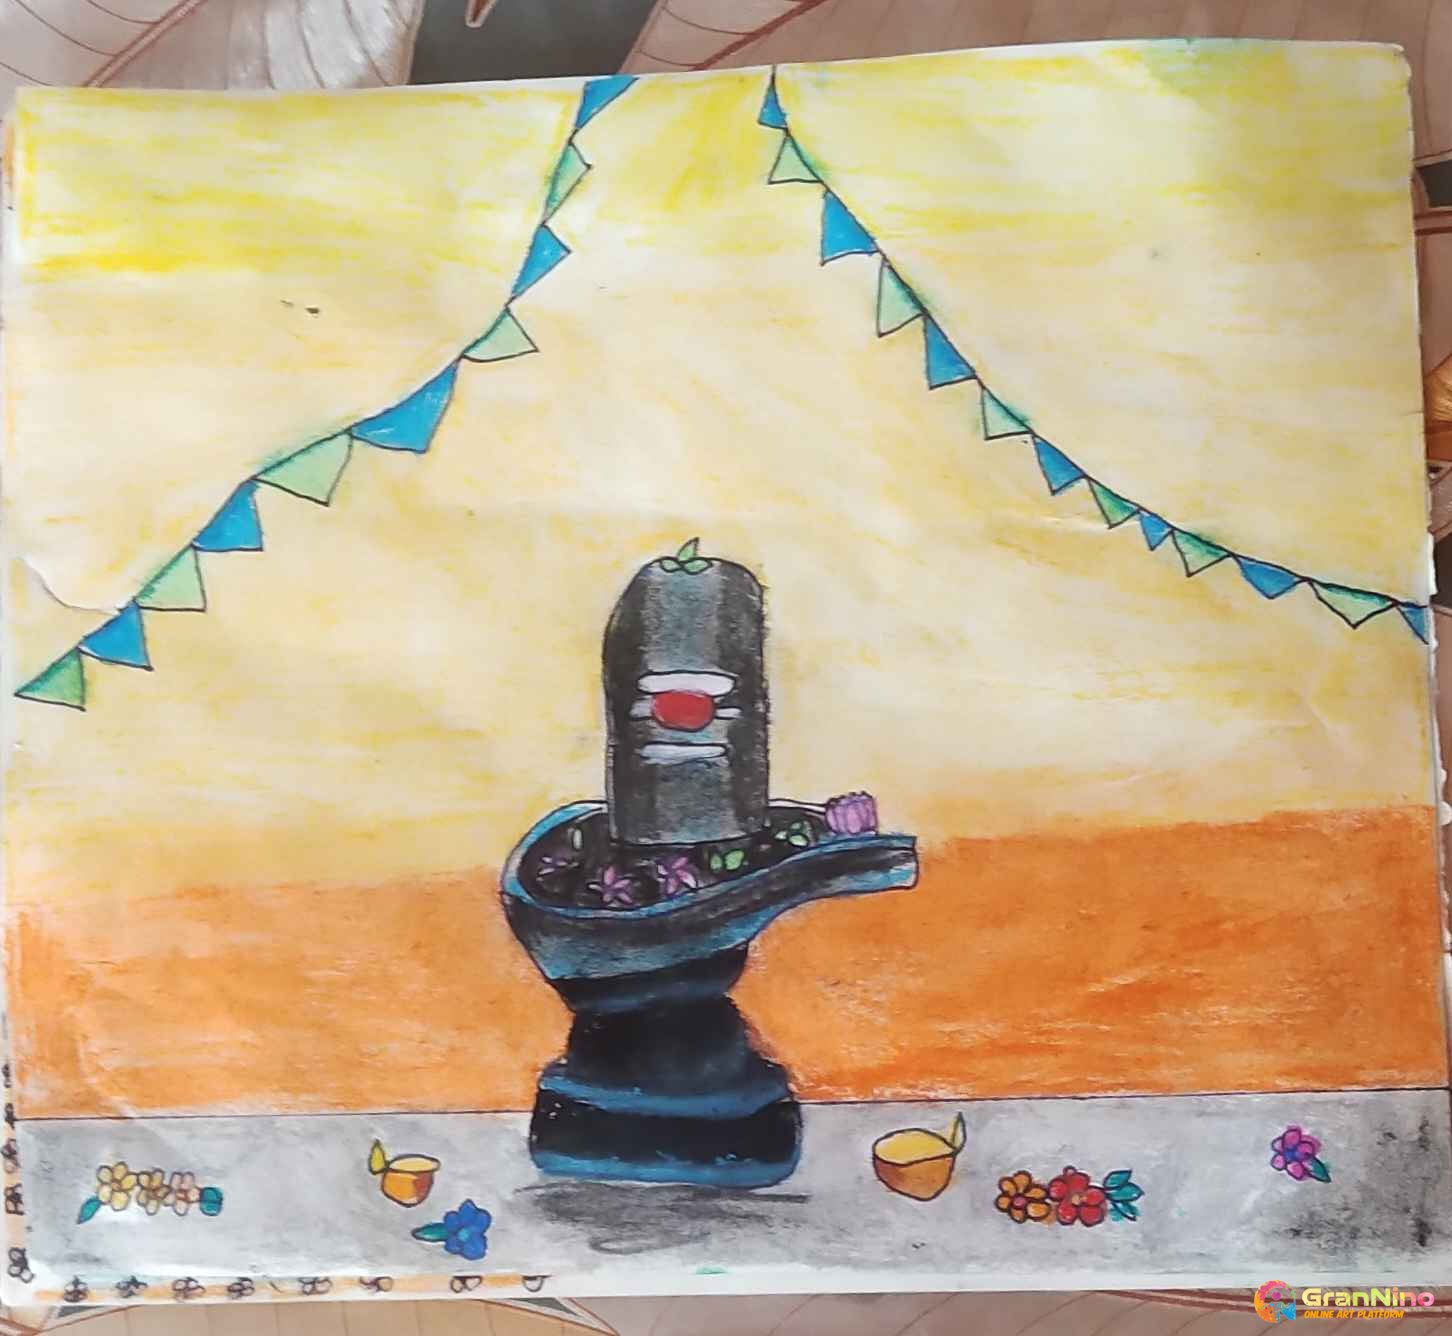 How to draw and color Ardhanarishvara - Maha Shivaratri special | Art for  kids, Drawings, Fun